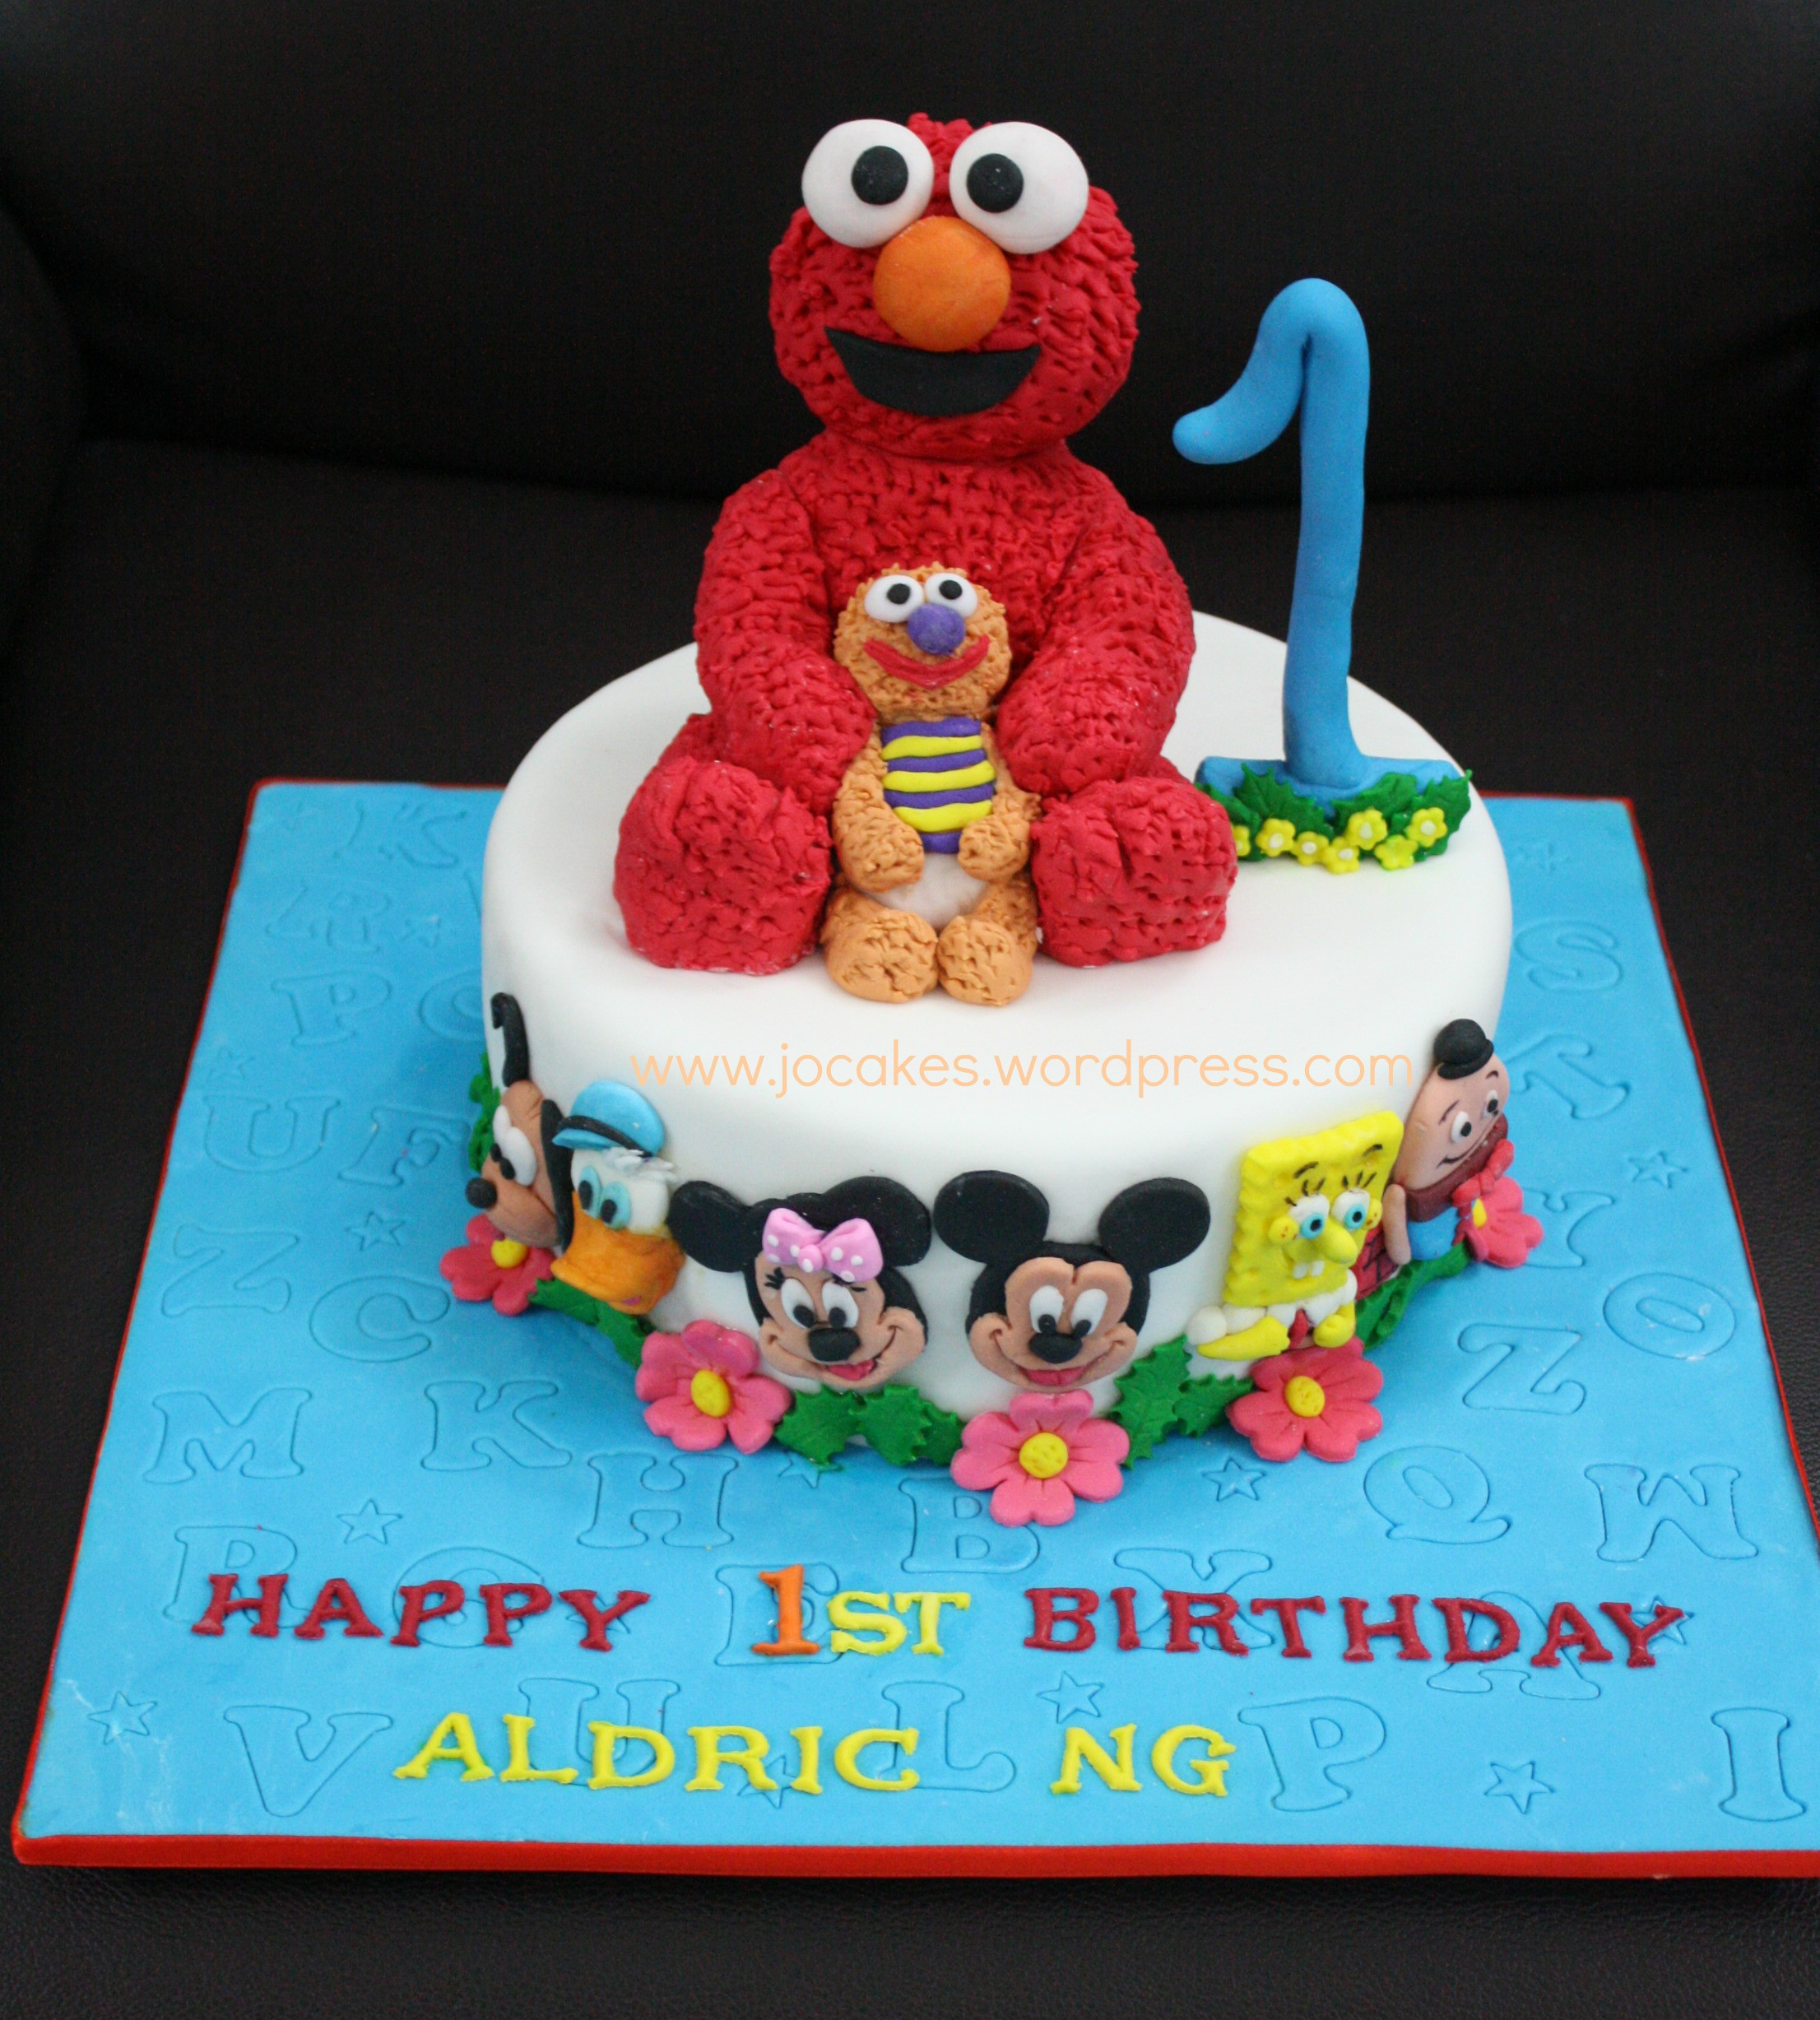 1 Year Old Birthday Cake
 Elmo cake for 1 year old boy